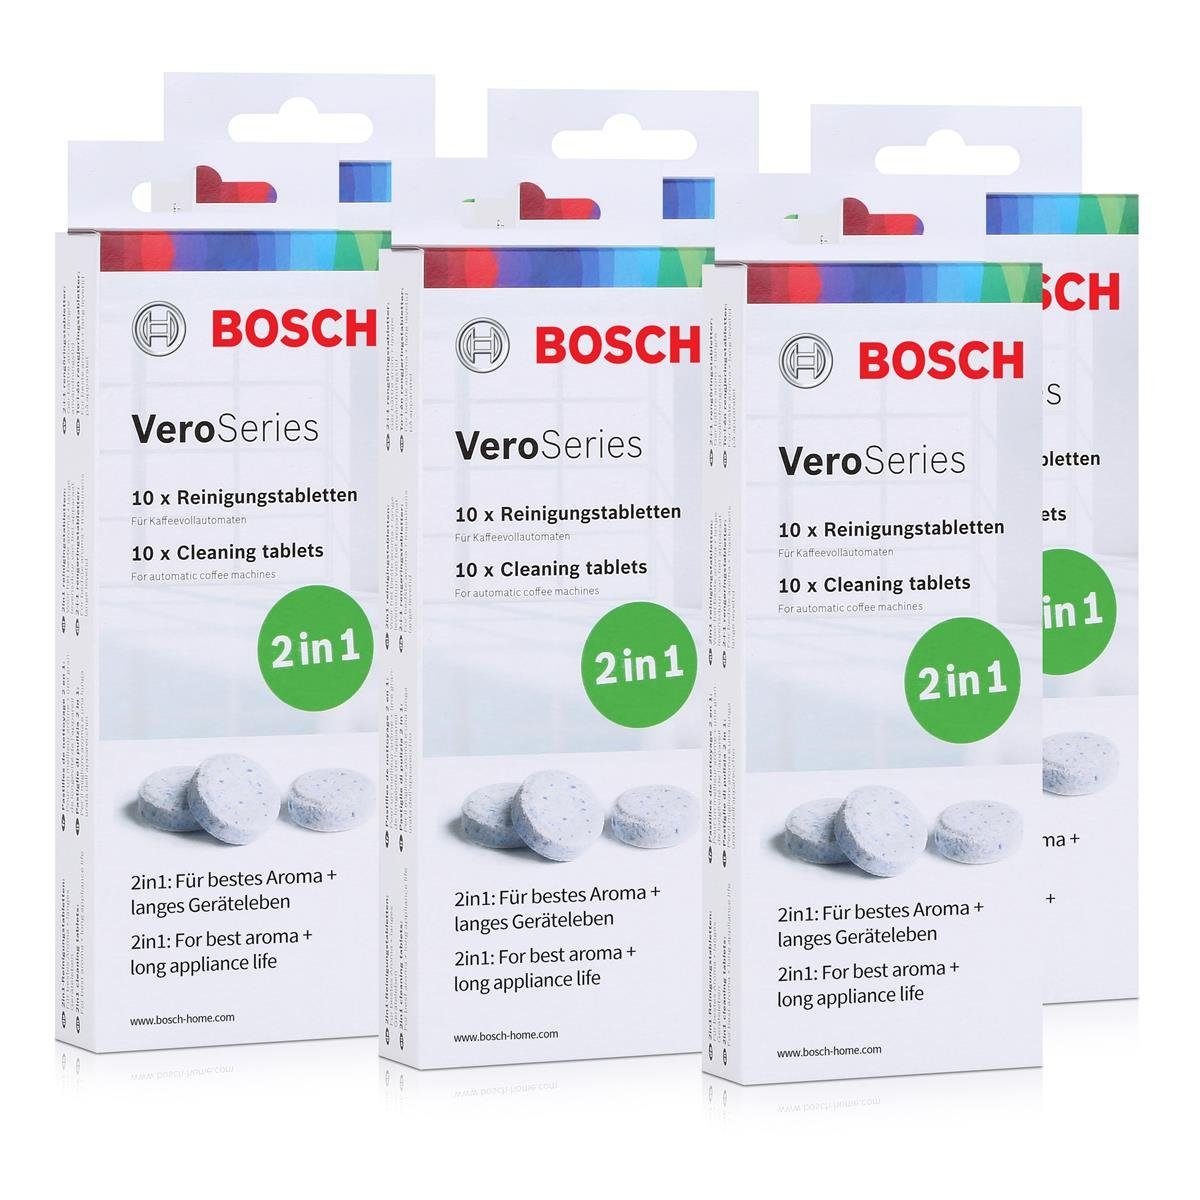 BOSCH Bosch VeroSeries TCZ8001 Reinigungstabletten 2in1 - 10 Tabletten (6er Reinigungstabletten